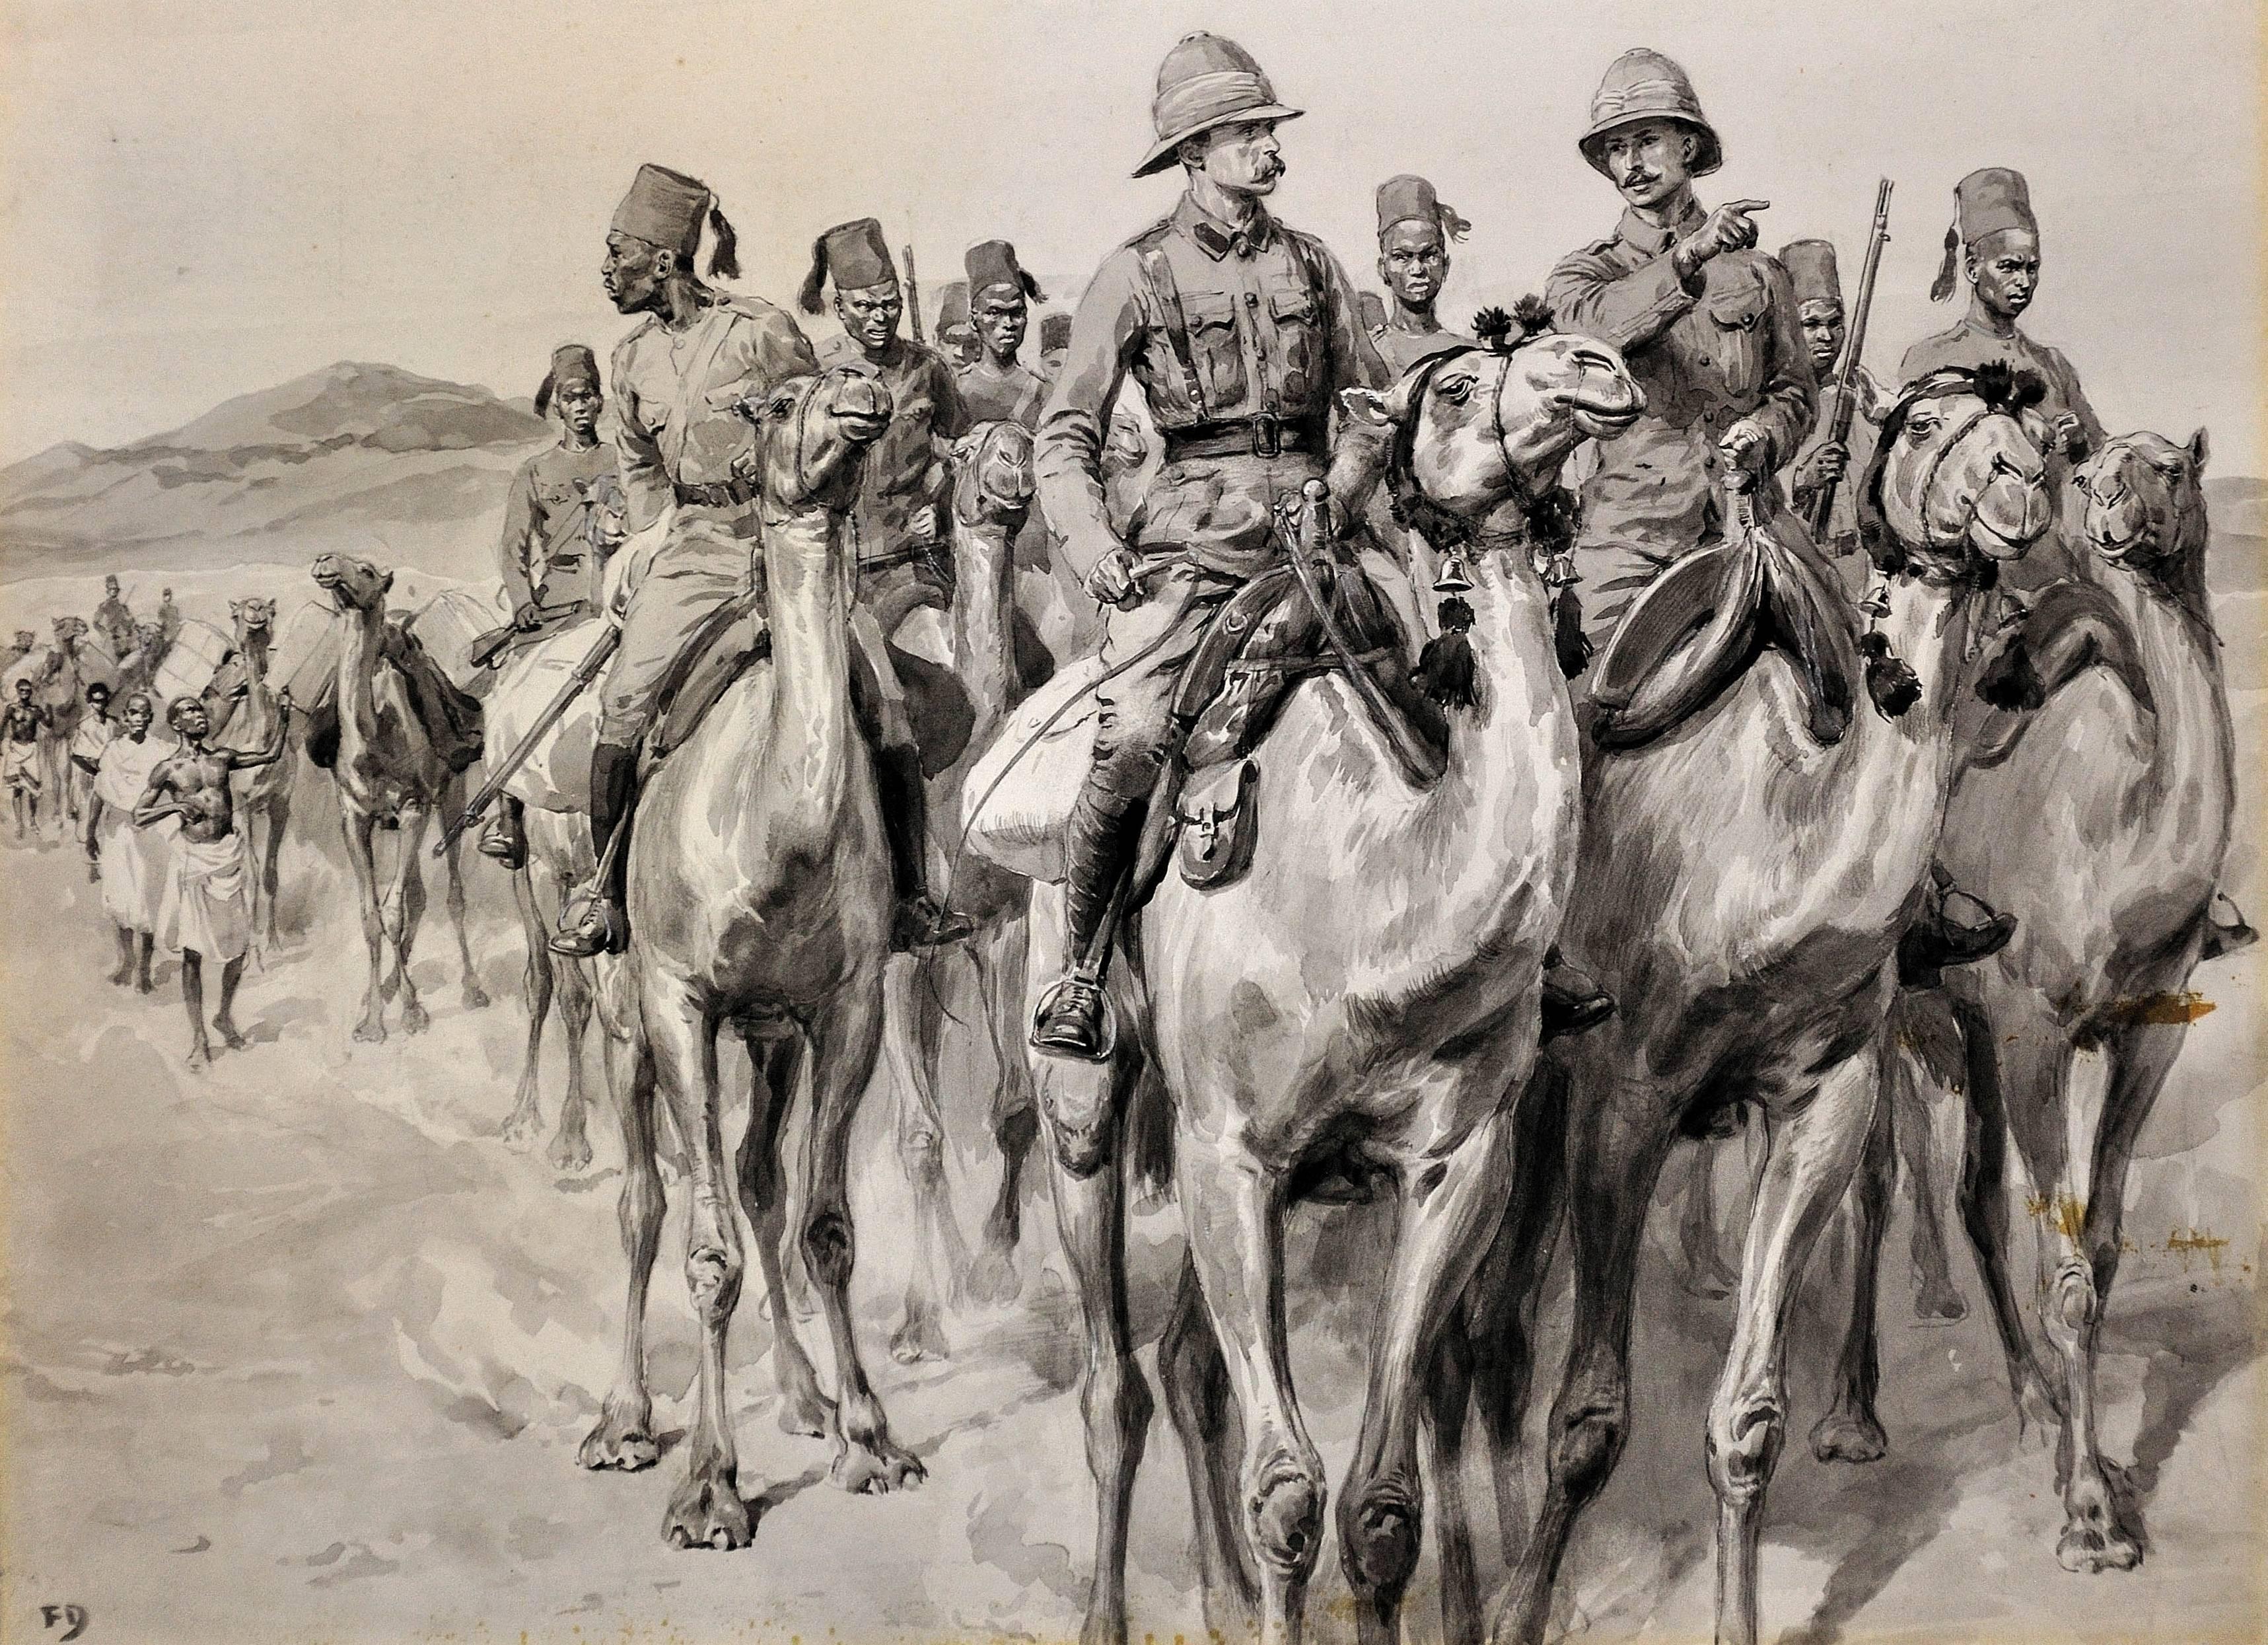 Frank Dadd Animal Art - British Army Camel Corps, Sudan, North Africa. Original En Grisaille Watercolor.